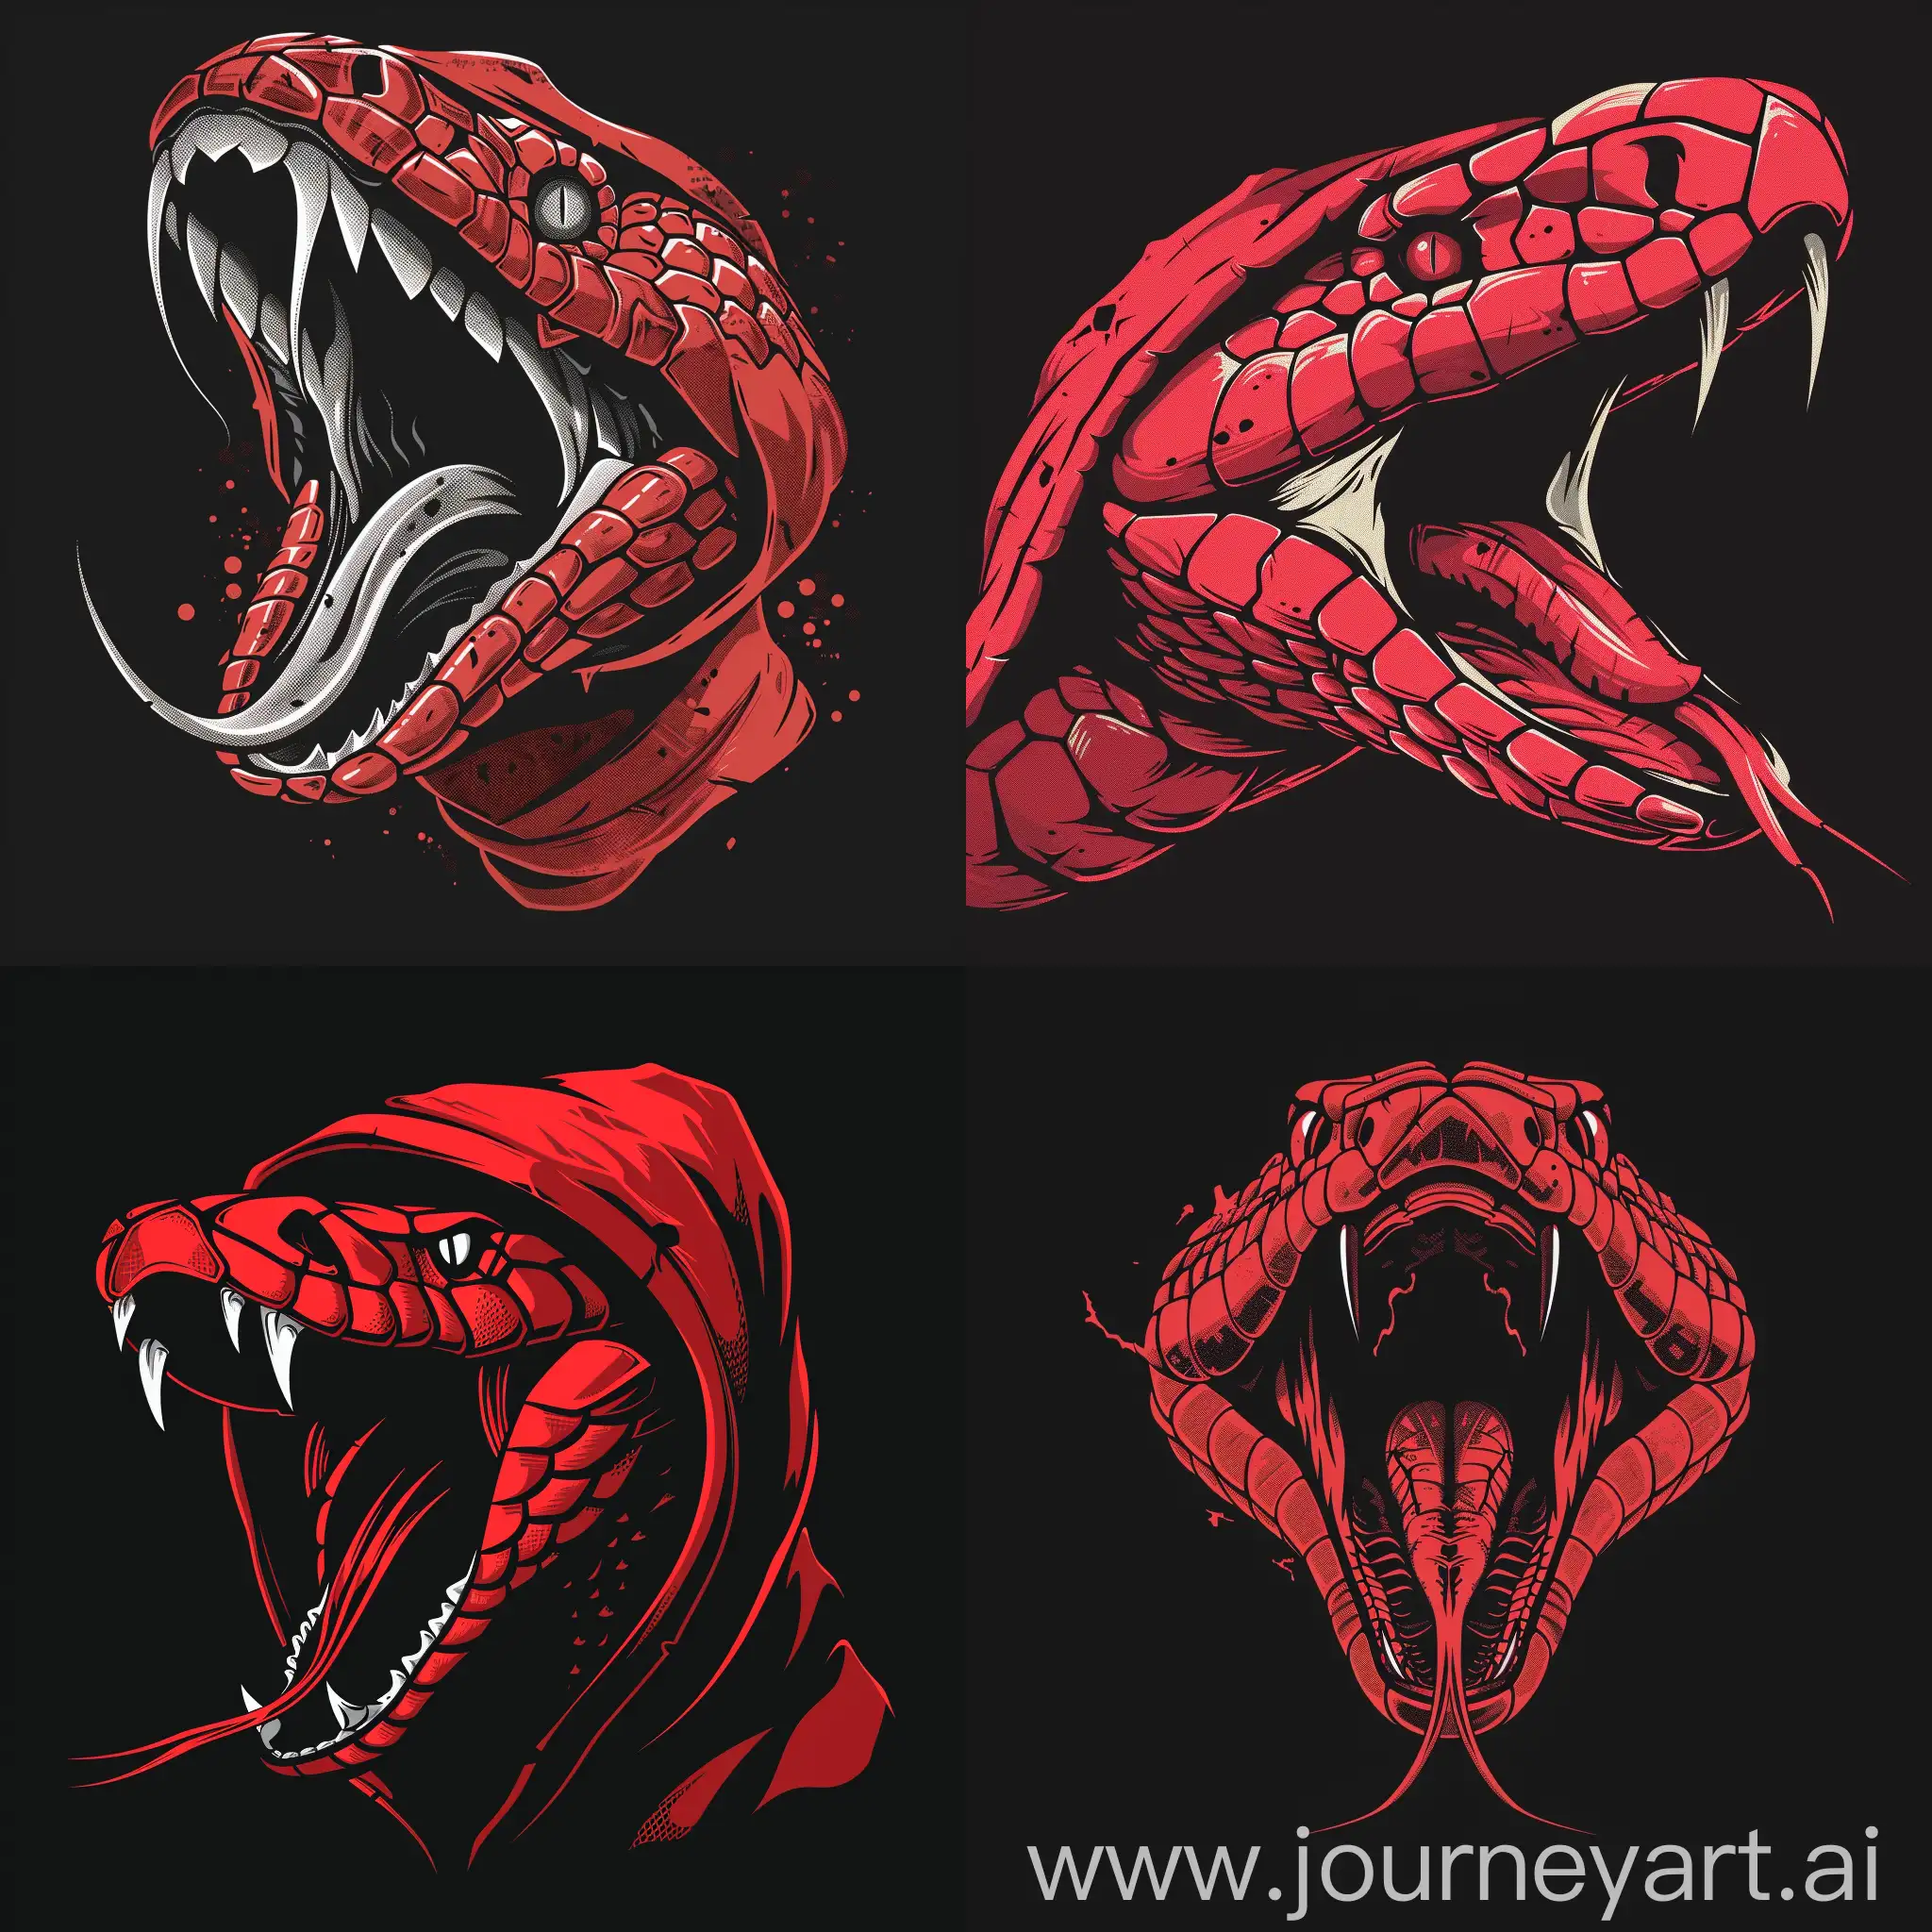 Cobra head, cobra skull, open mouth, open hood, brutality, angular design, minimalistic design, 2D, vector graphics, red color, black background